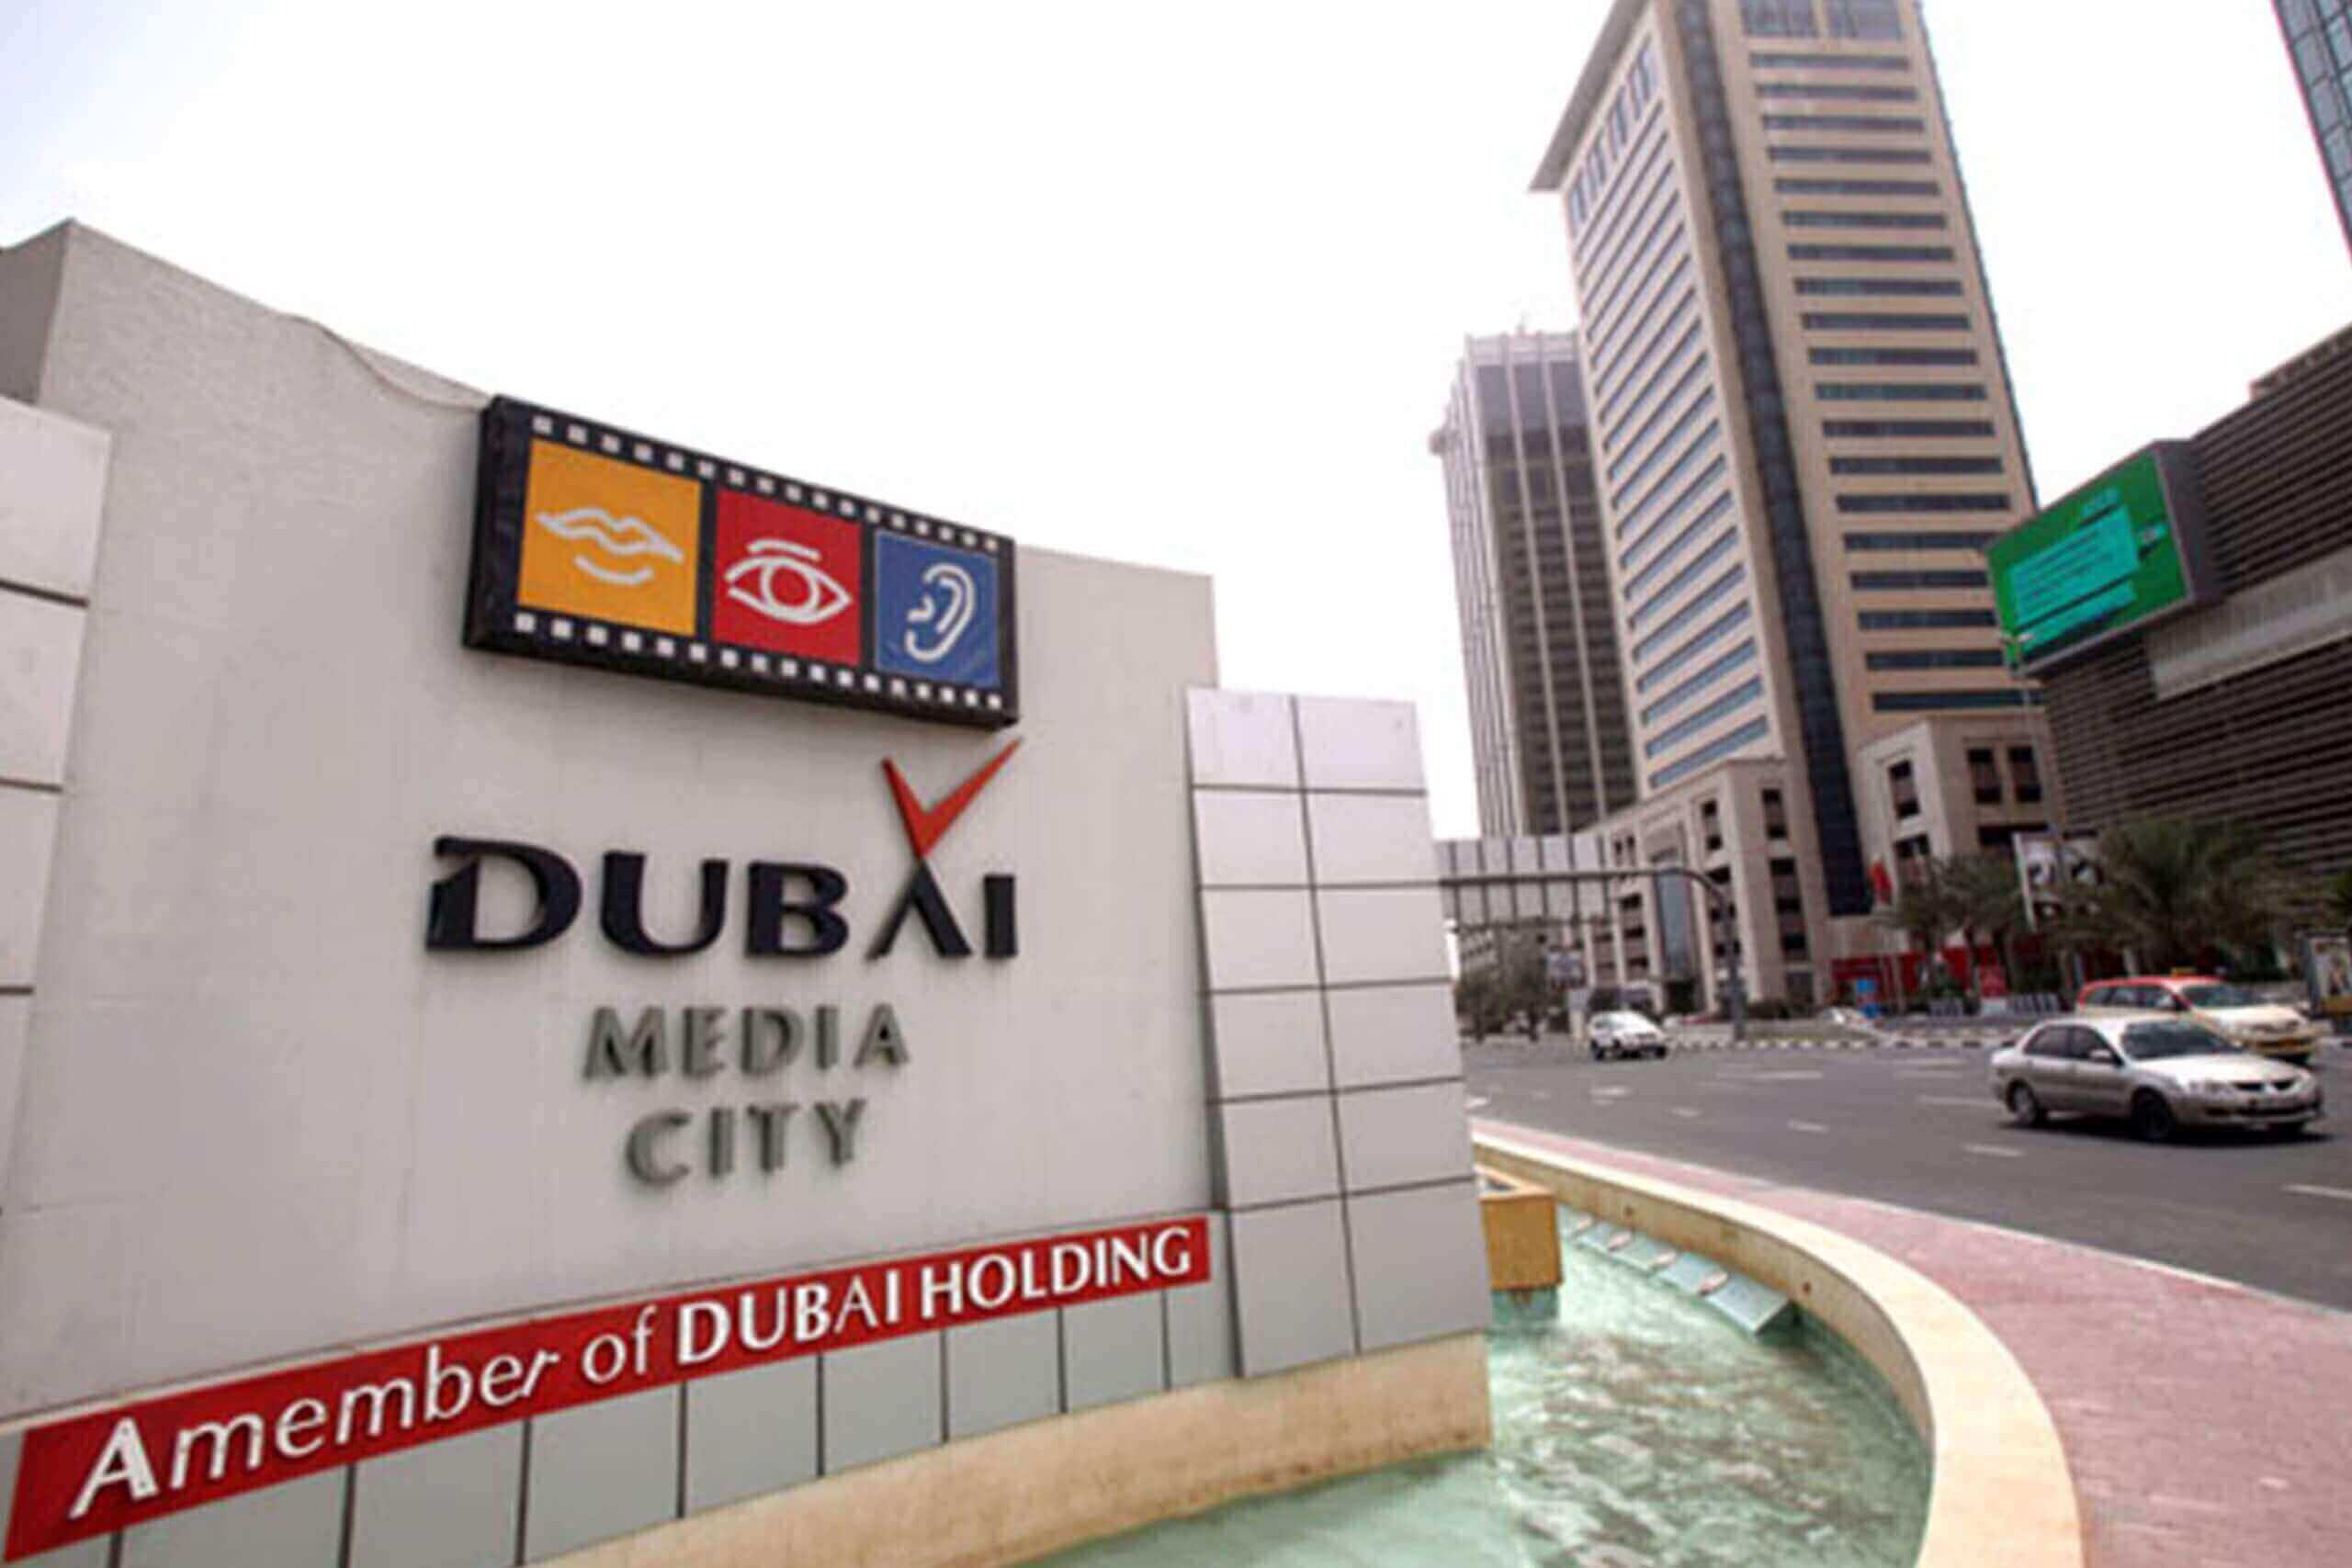 DMC Free Zone: The Future of Digital Innovation in Dubai